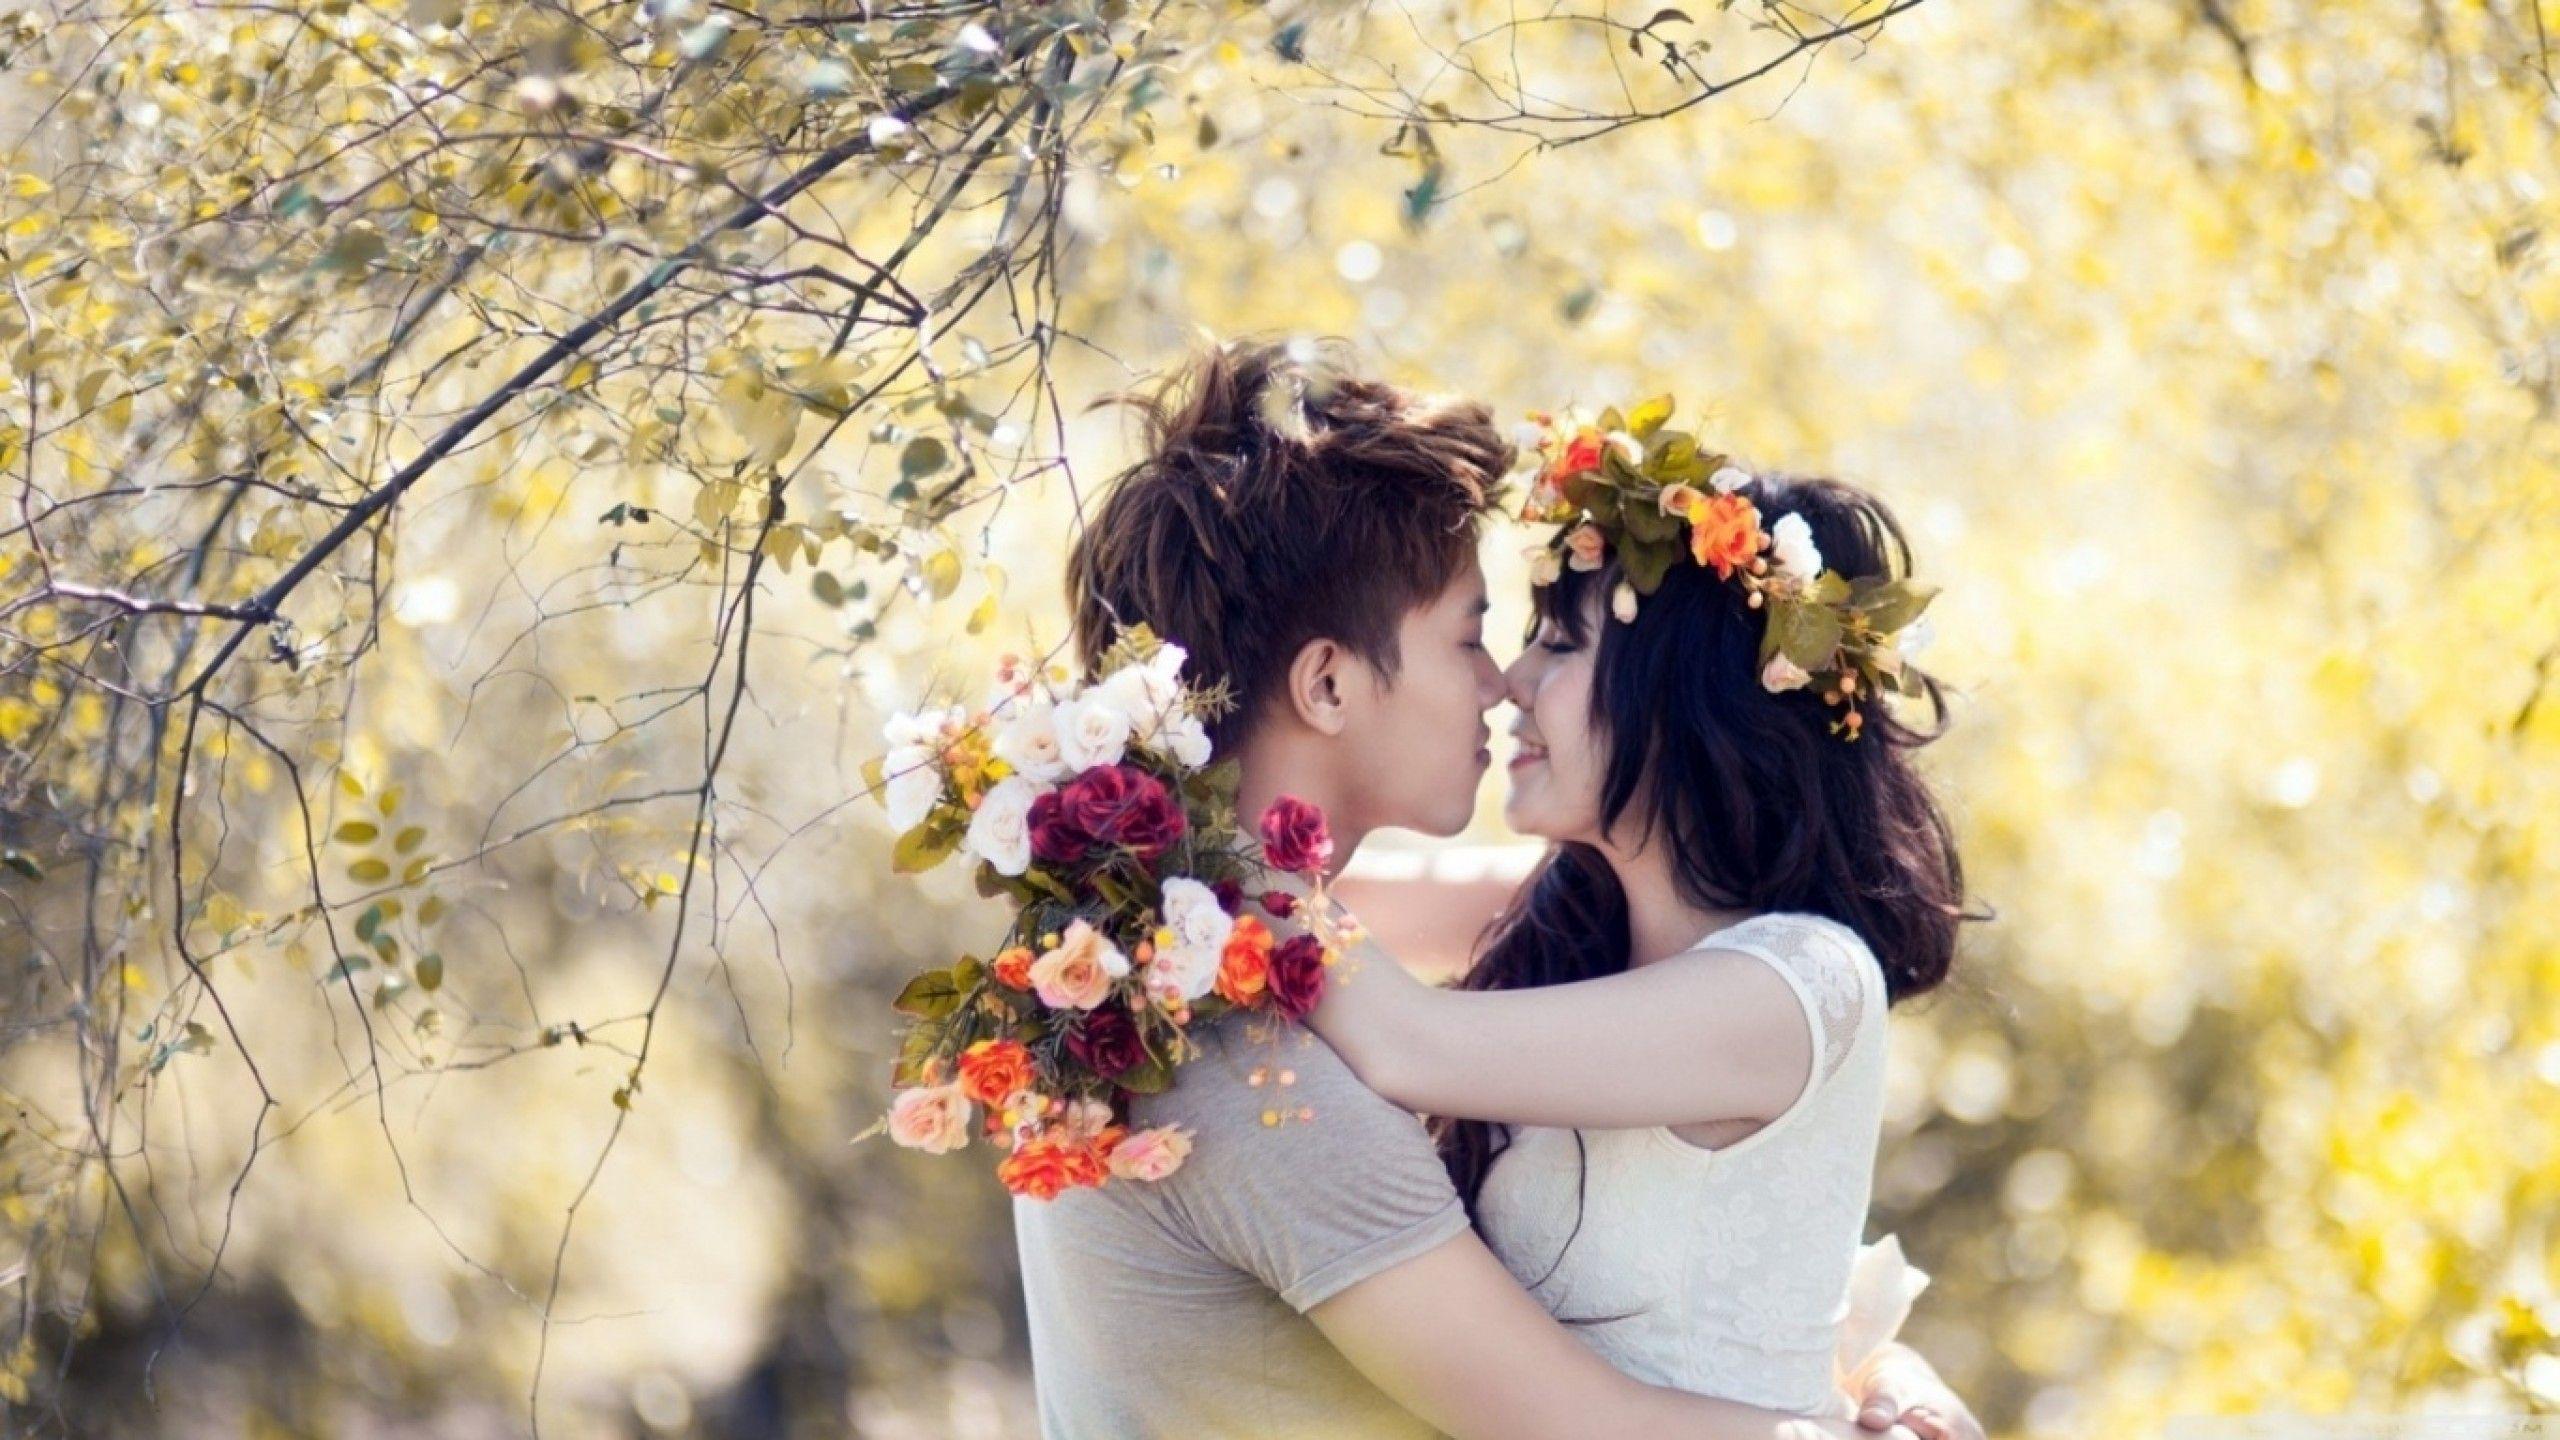 Best Romantic kiss kissing Picture Pics